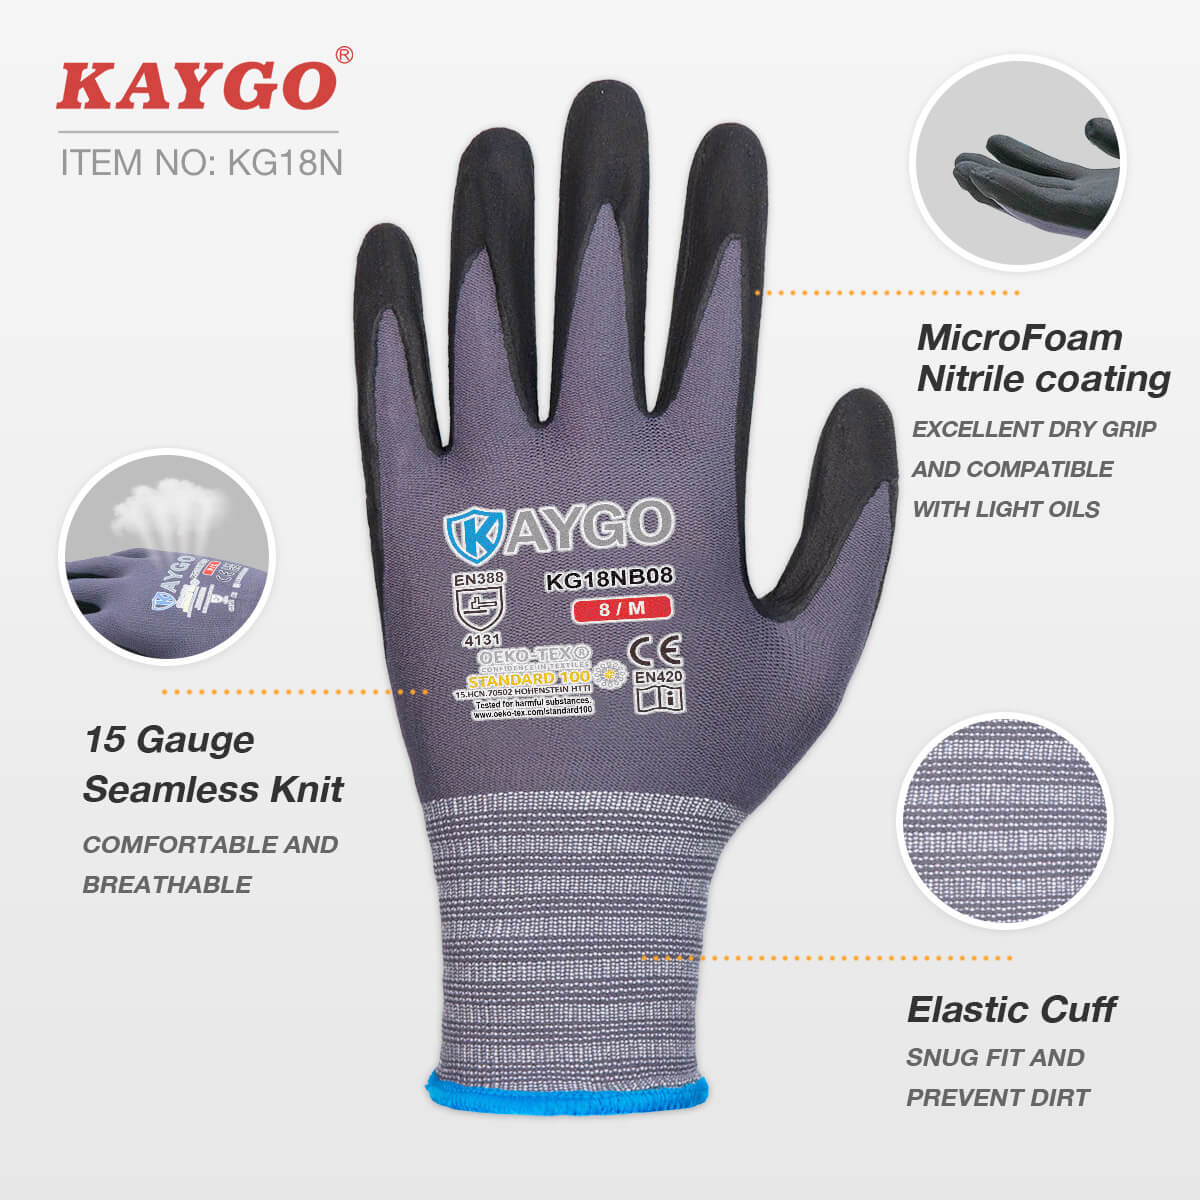 KAYGO Cut Resistant Gloves Polyurethane Coated - 3 Pairs, KG20PC,ANSI Cut Level A3